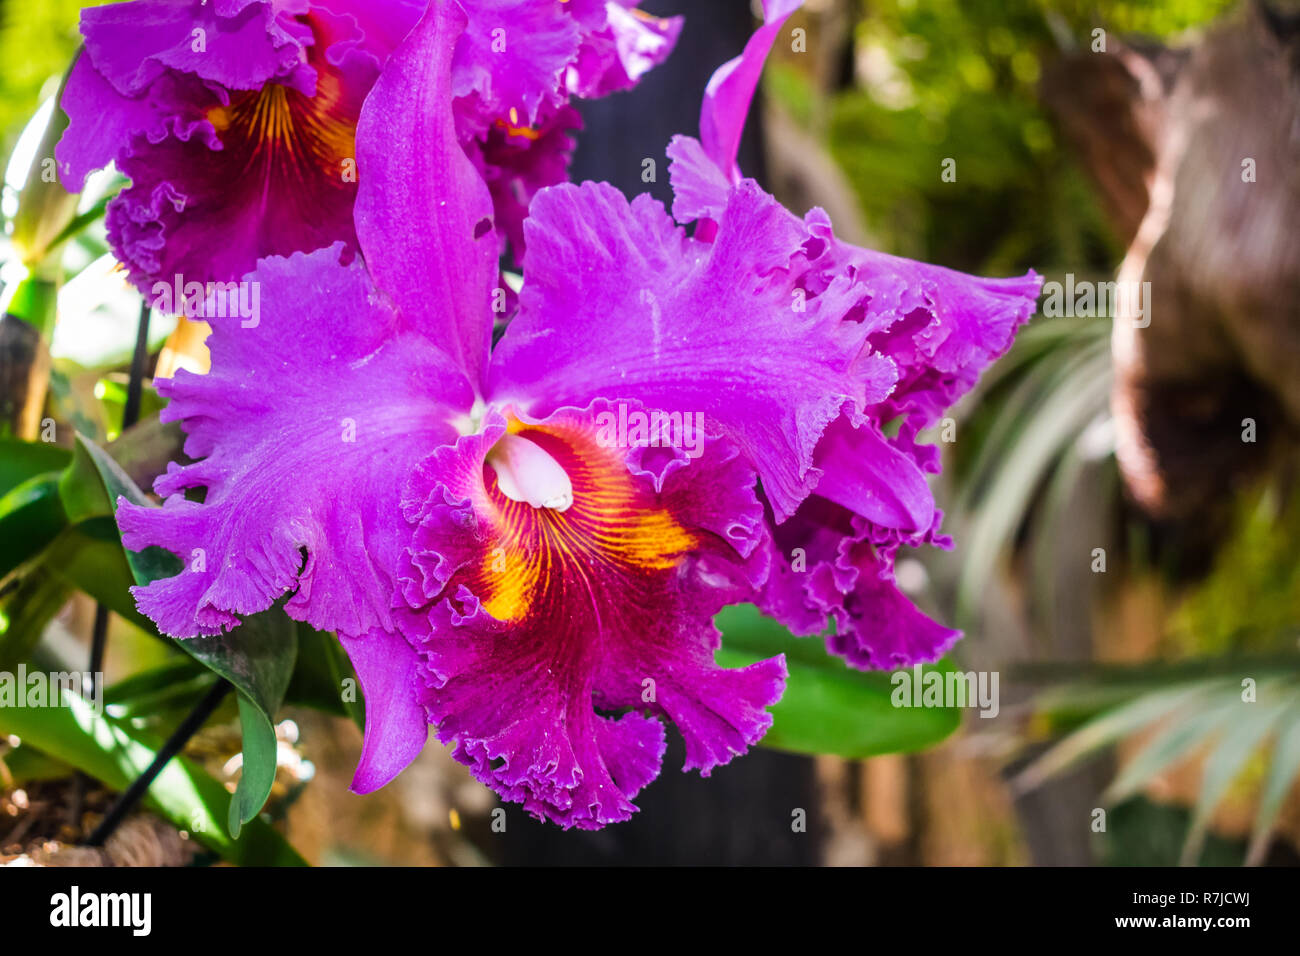 Cattleya hybrid orchid, with jungle vegetation background Stock Photo